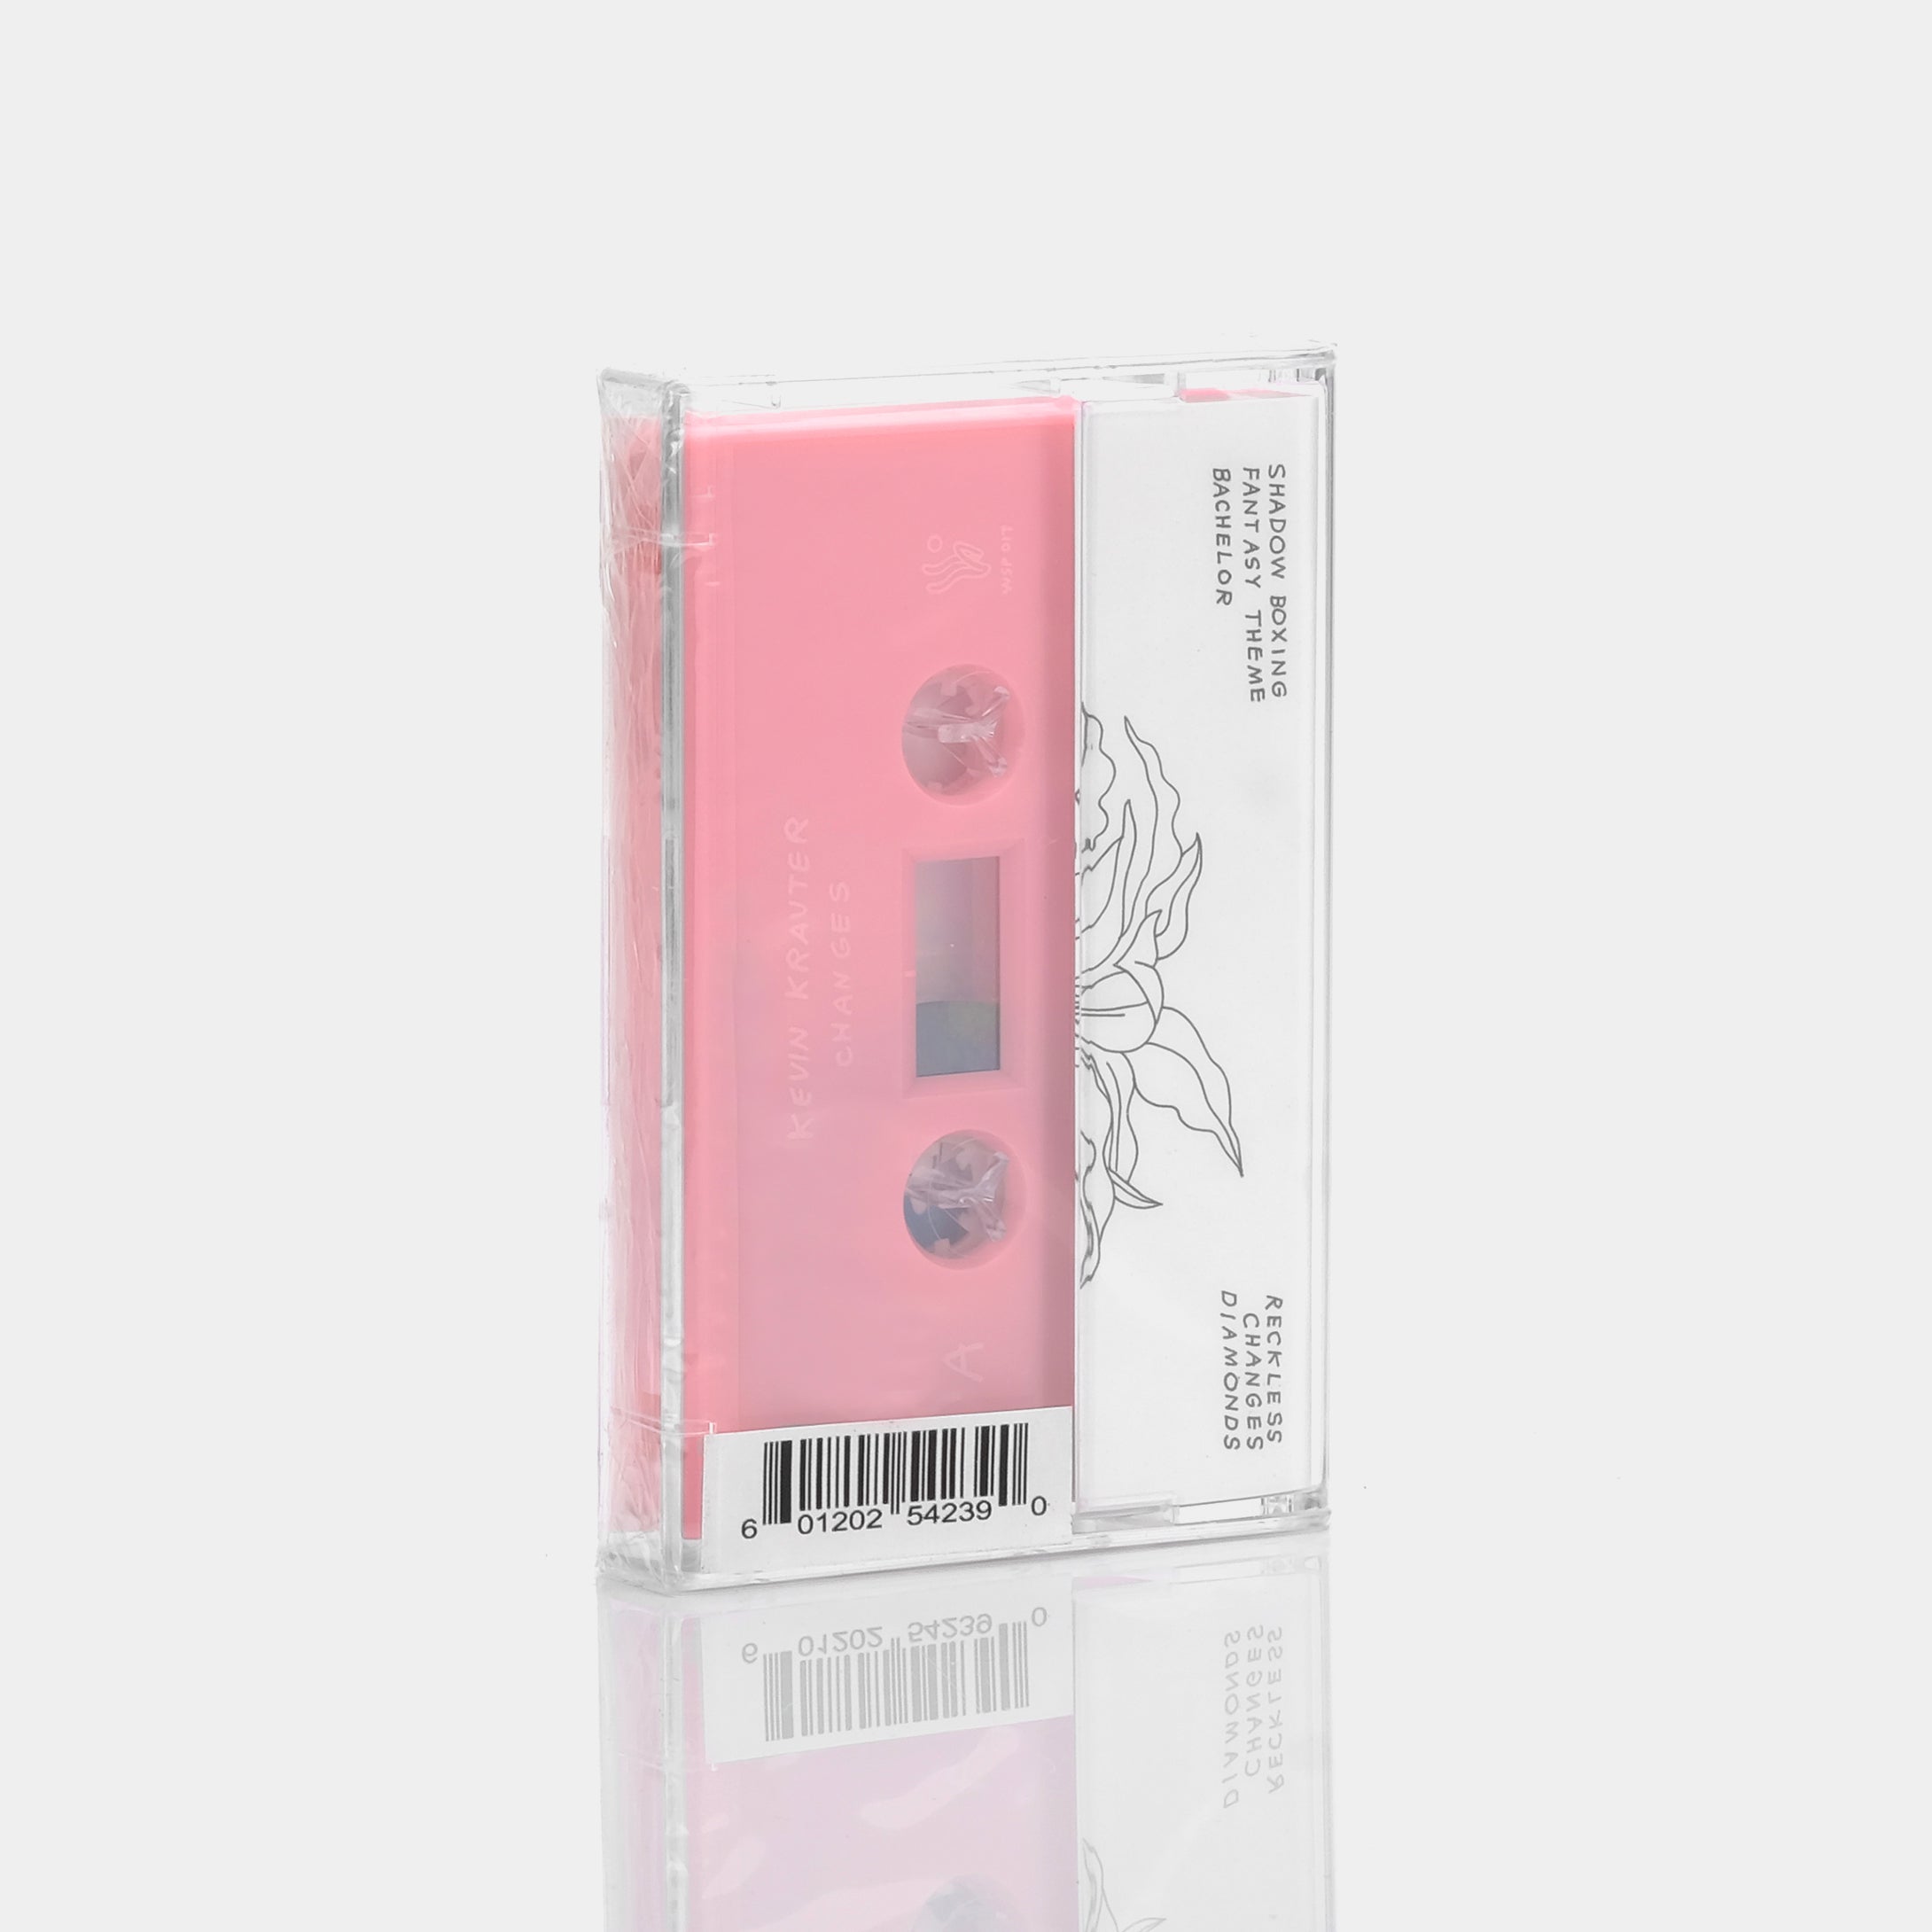 Kevin Krauter - Changes Cassette Tape